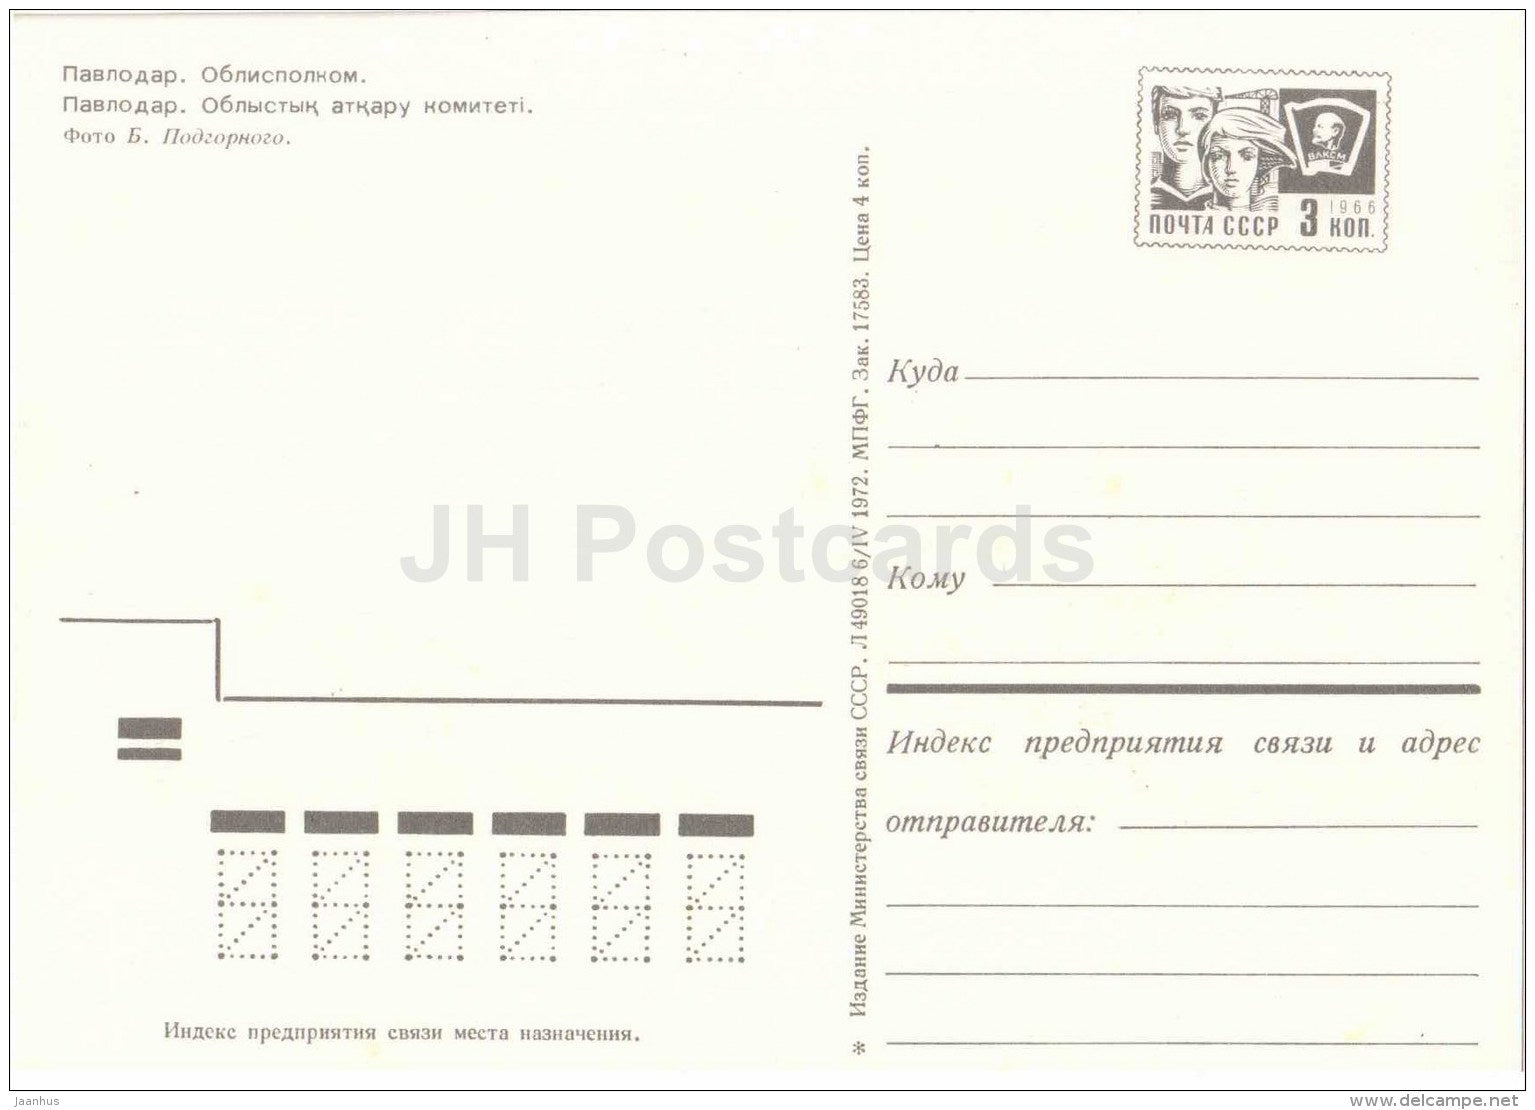 Executive Committee - car Volga , Moskvitch - Pavlodar - postal stationery - 1972 - Kazakhstan USSR - unused - JH Postcards